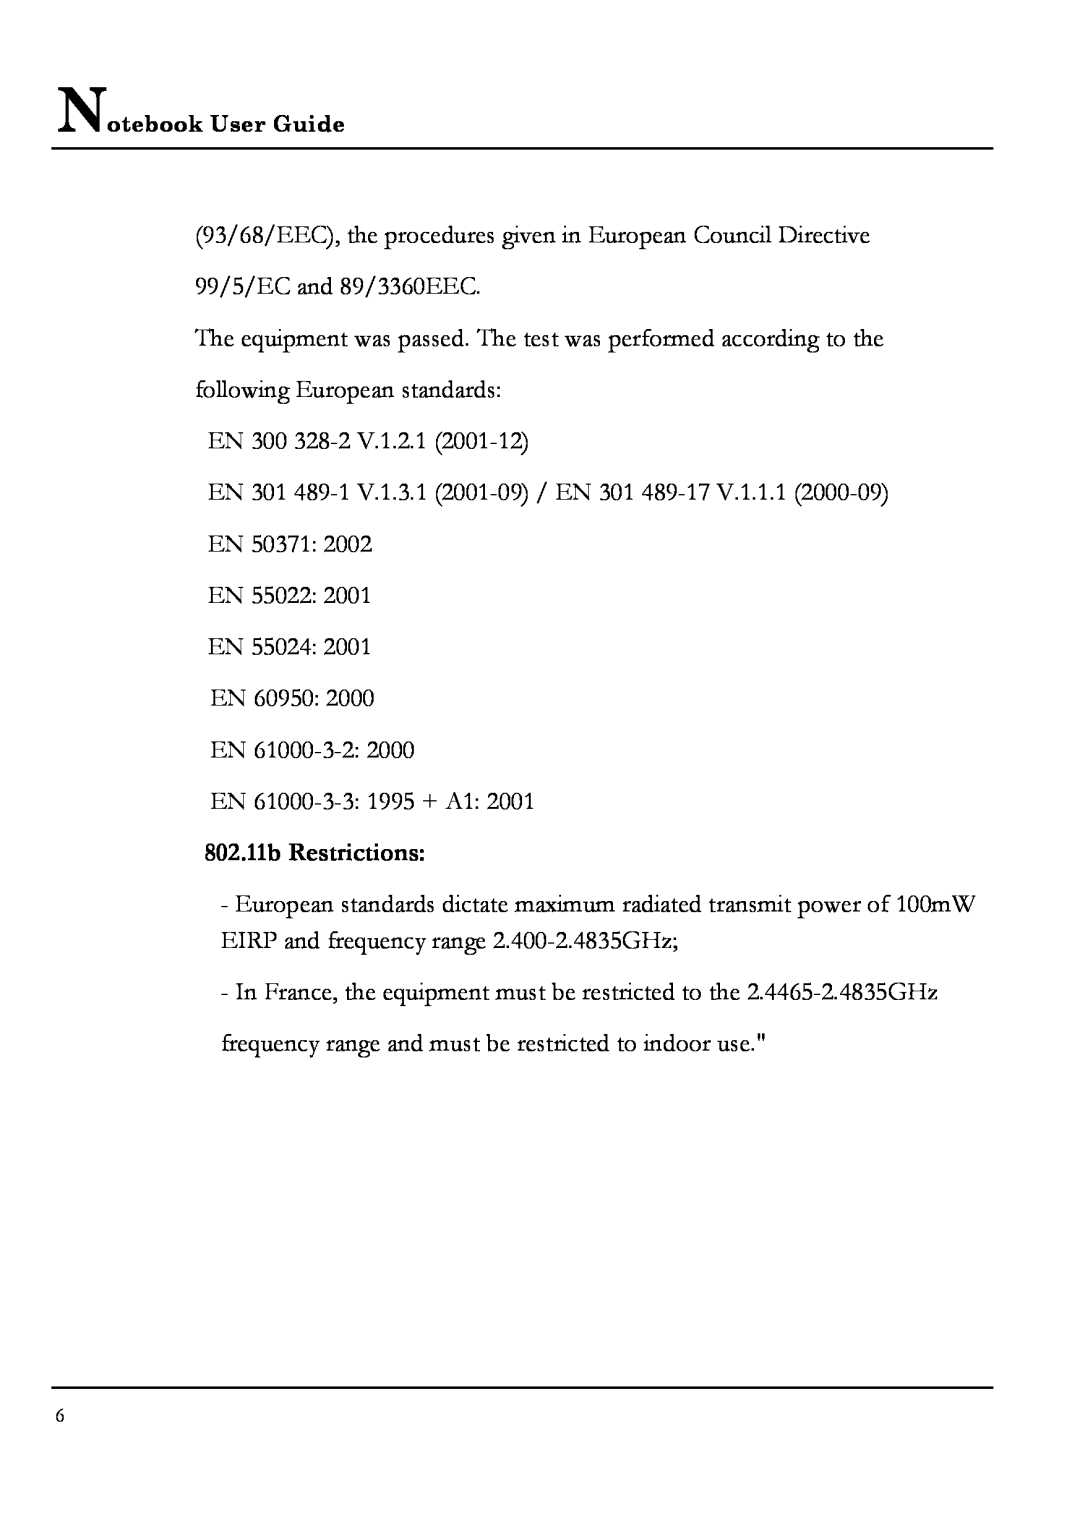 Everex NM3500W, NM4100W, NM3700W, NM3900W manual 802.11b Restrictions 